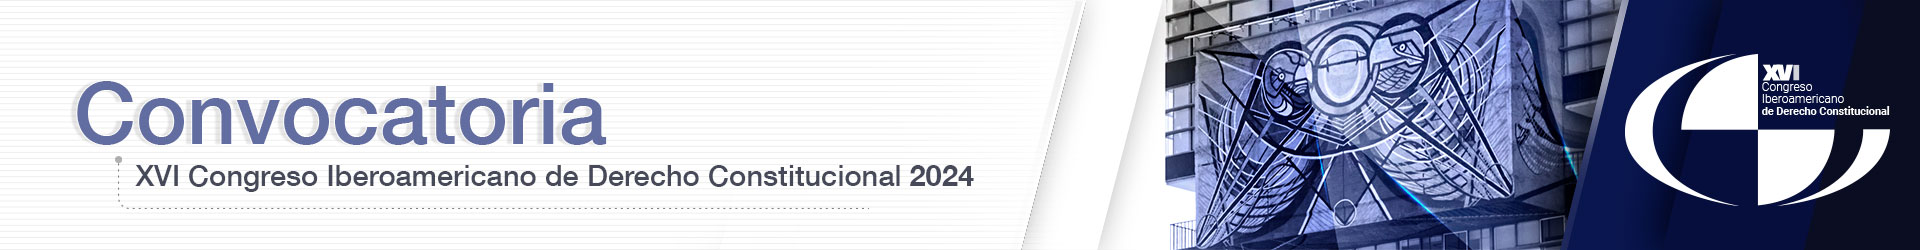 XVI CONGRESO IBEROAMERICANO DE DERECHO CONSTITUCIONAL 2024